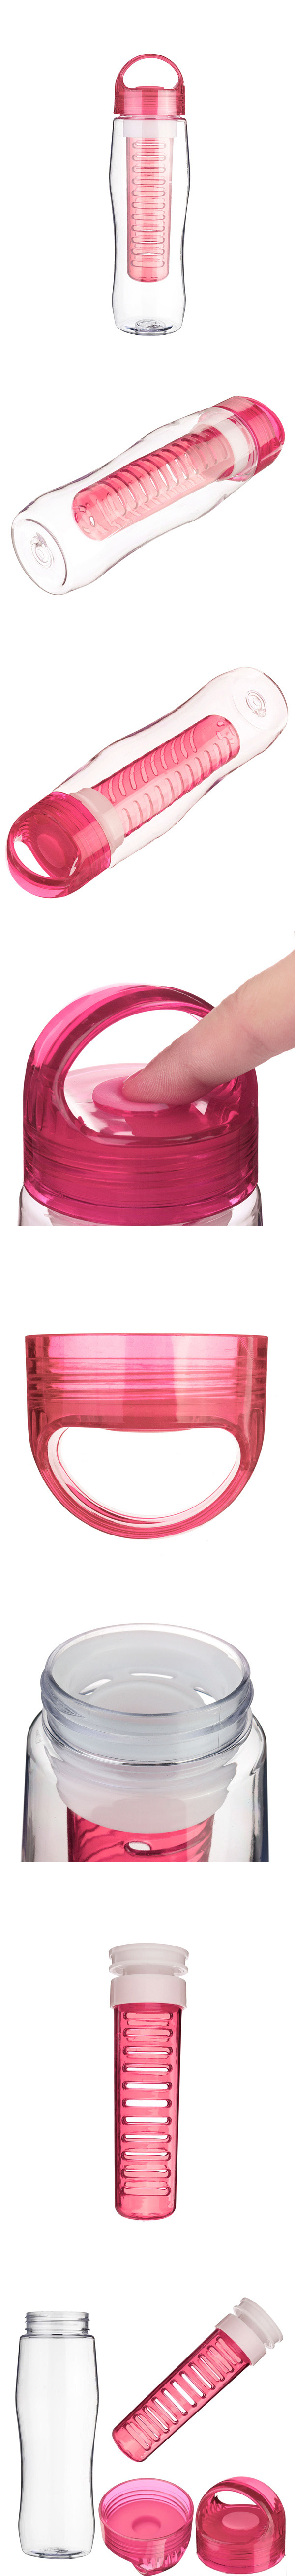 700ML-Sports-Plastic-Fruit-Infuser-Water-Bottle-Cup-BPA-Free-Filter-Juice-Maker-1016353-5